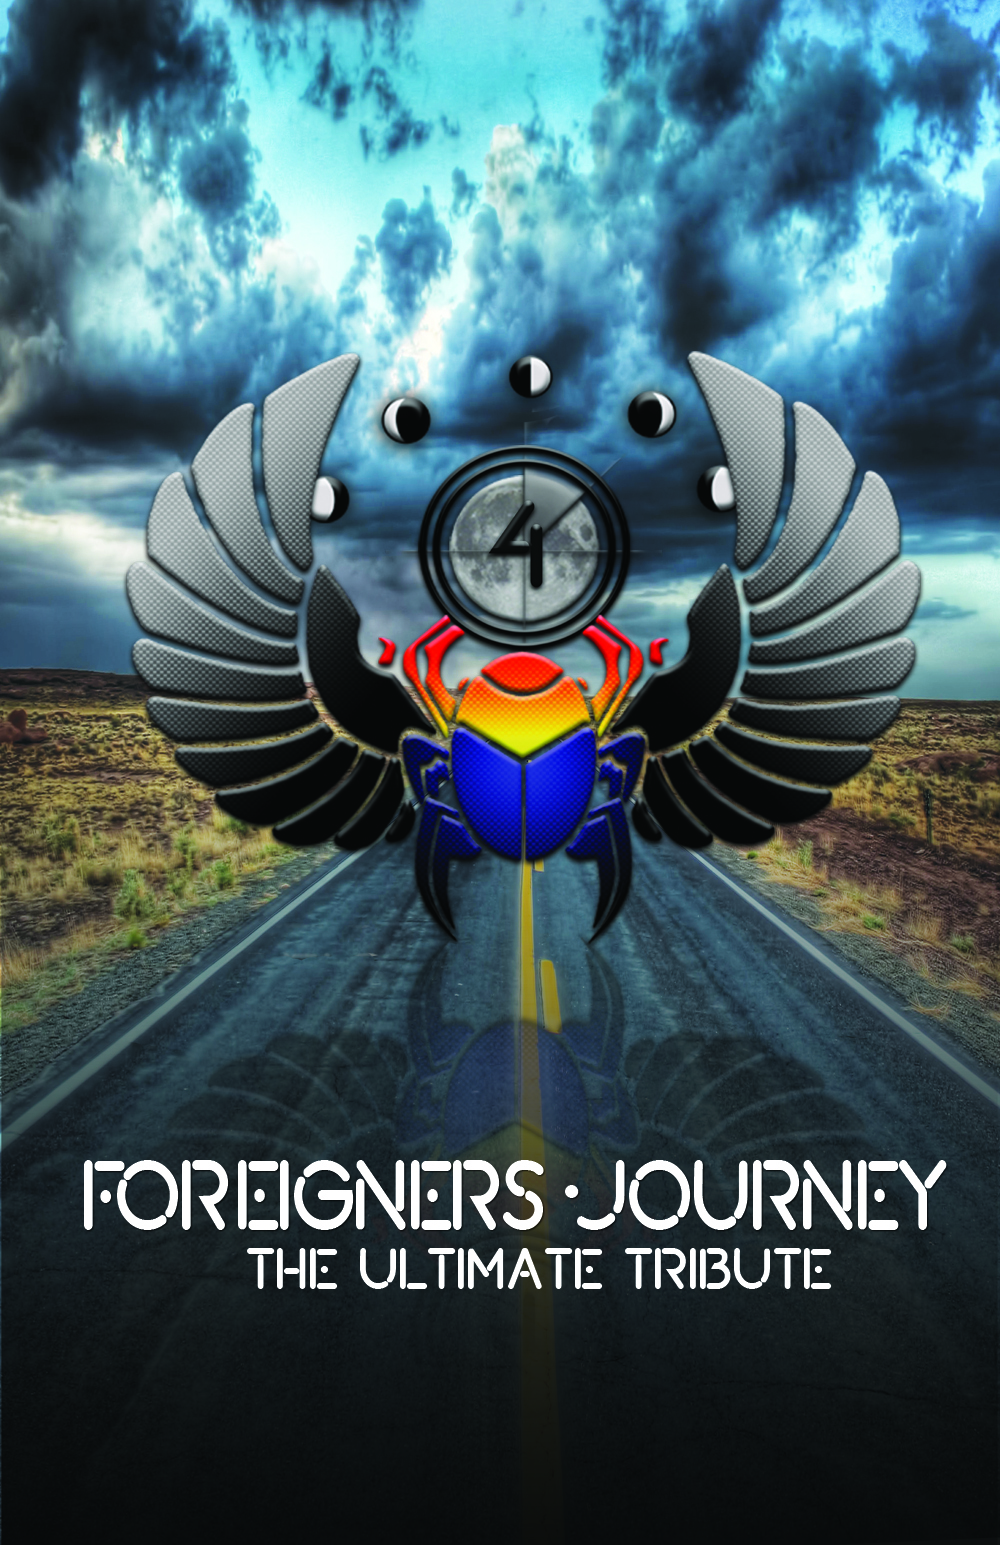 foreigners journey orlando